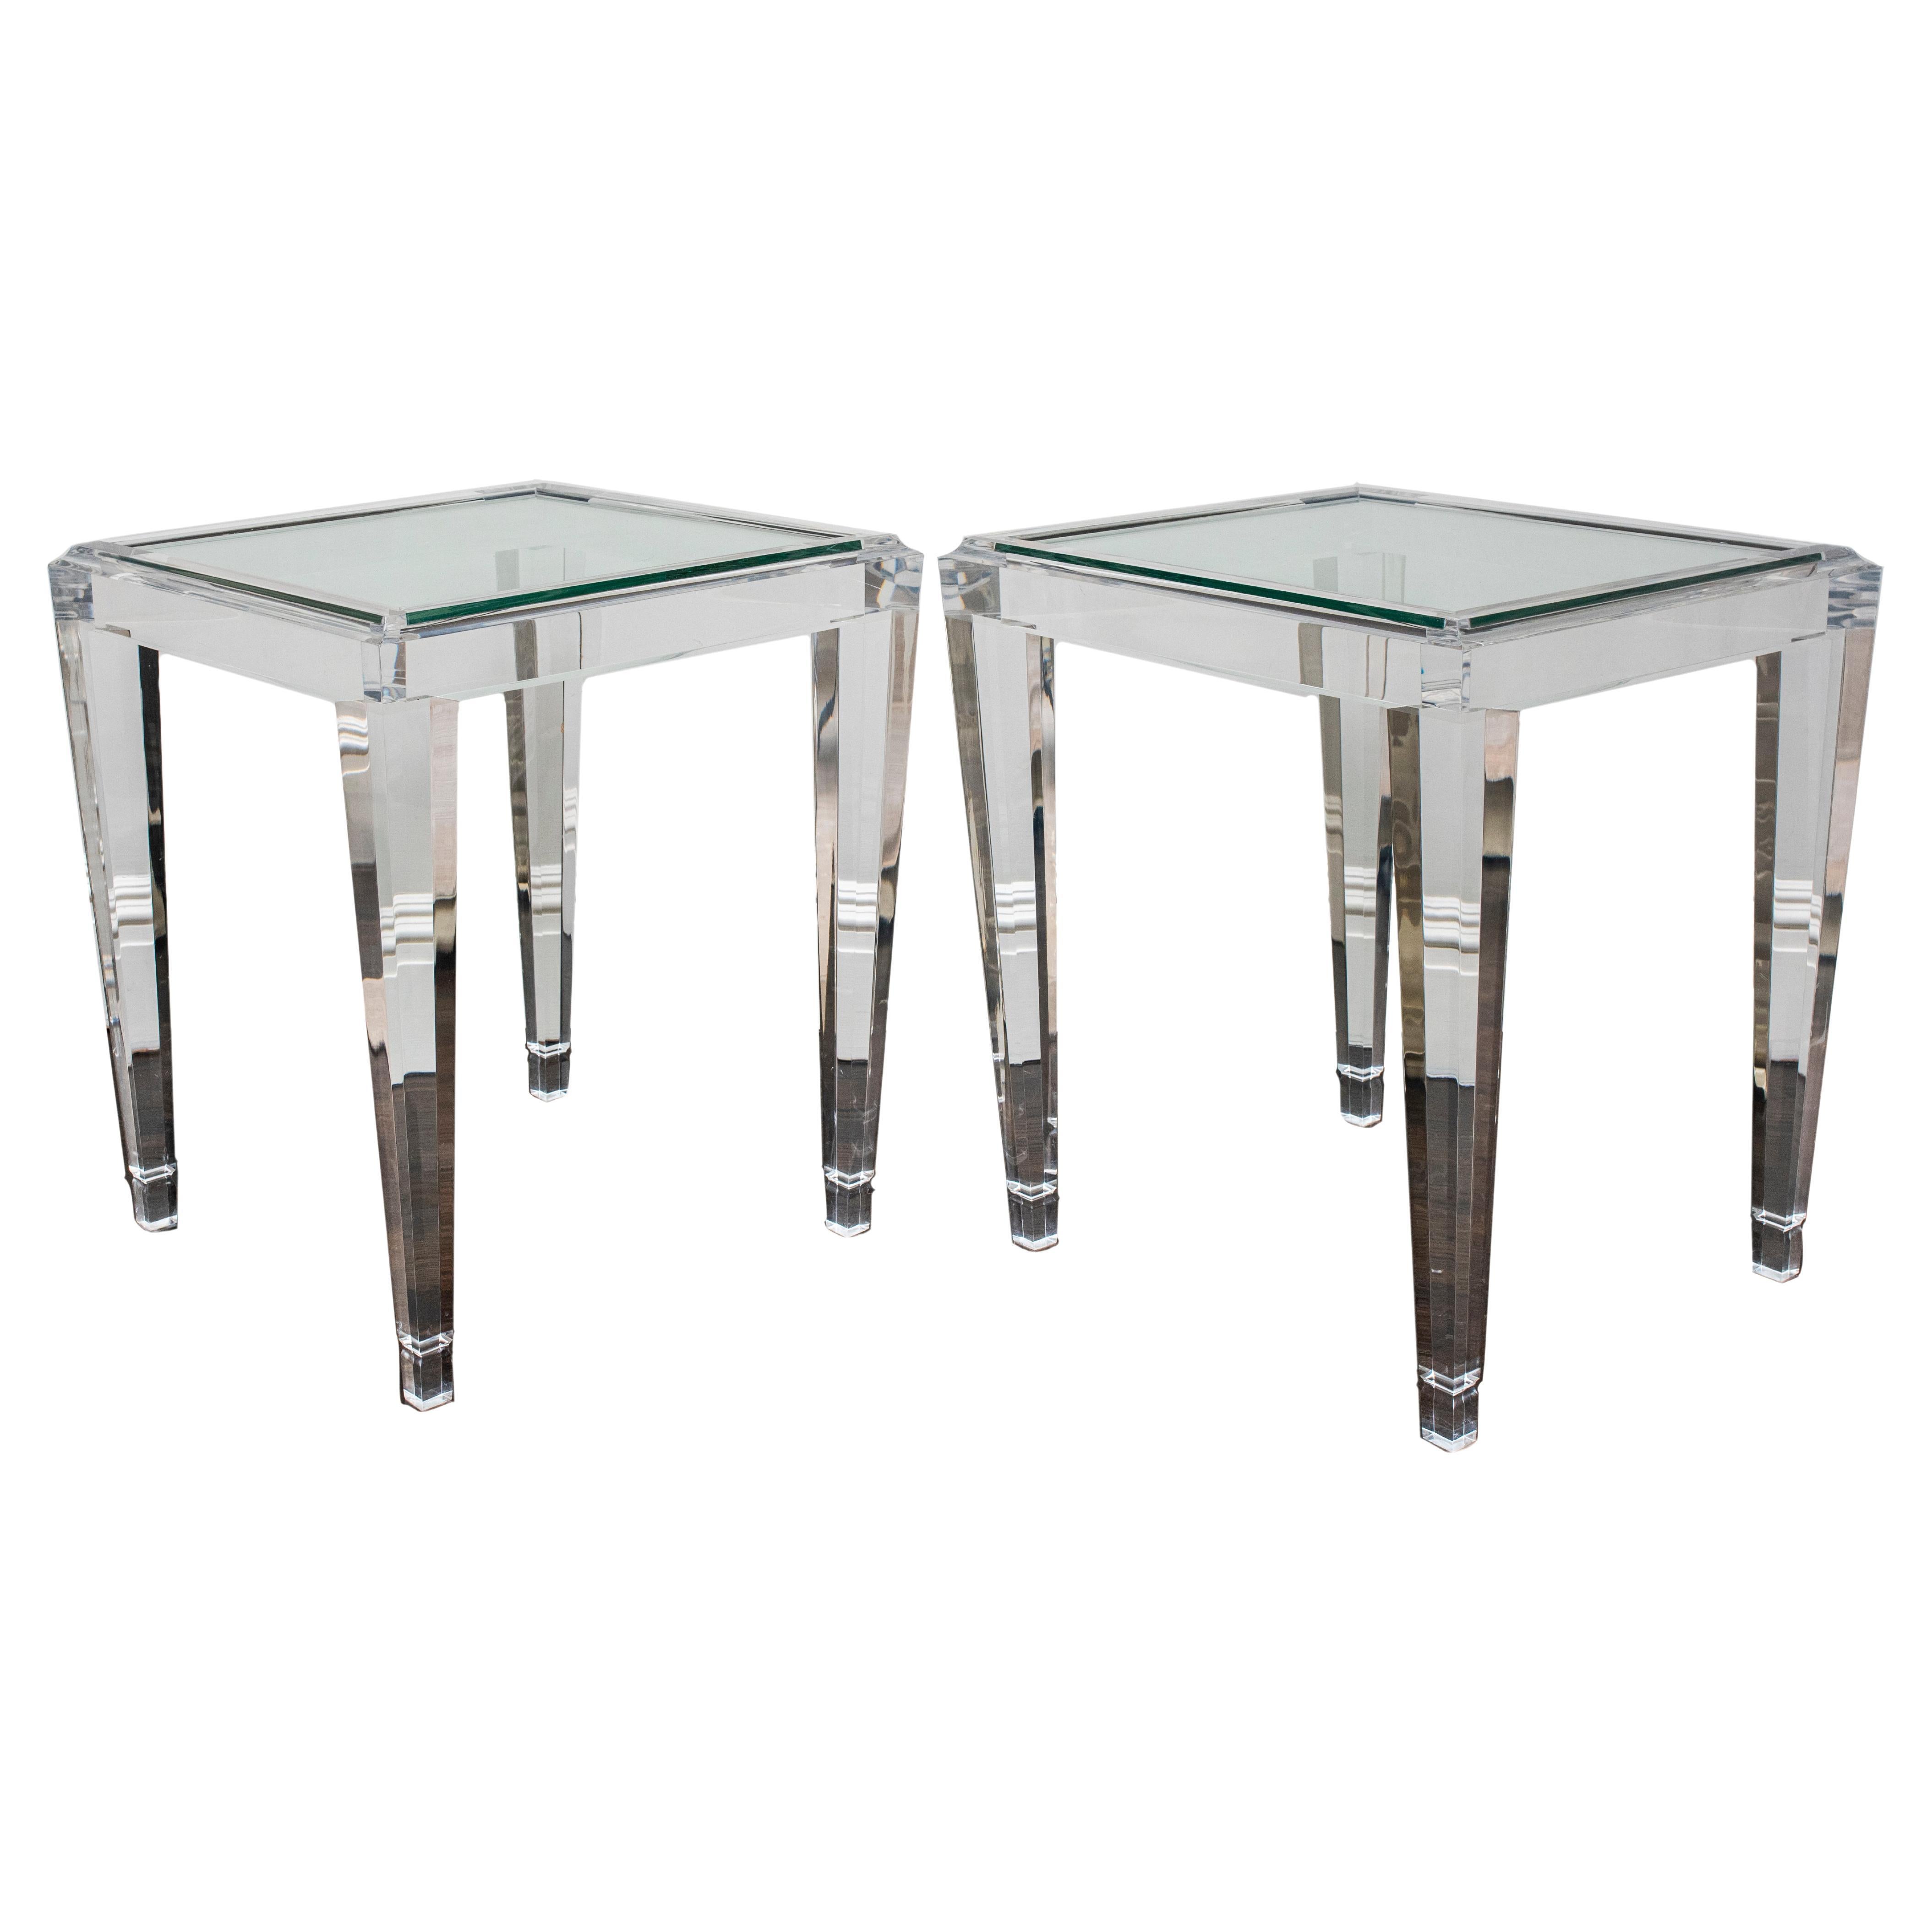 Modern Art Deco Revival Acrylic Side Tables